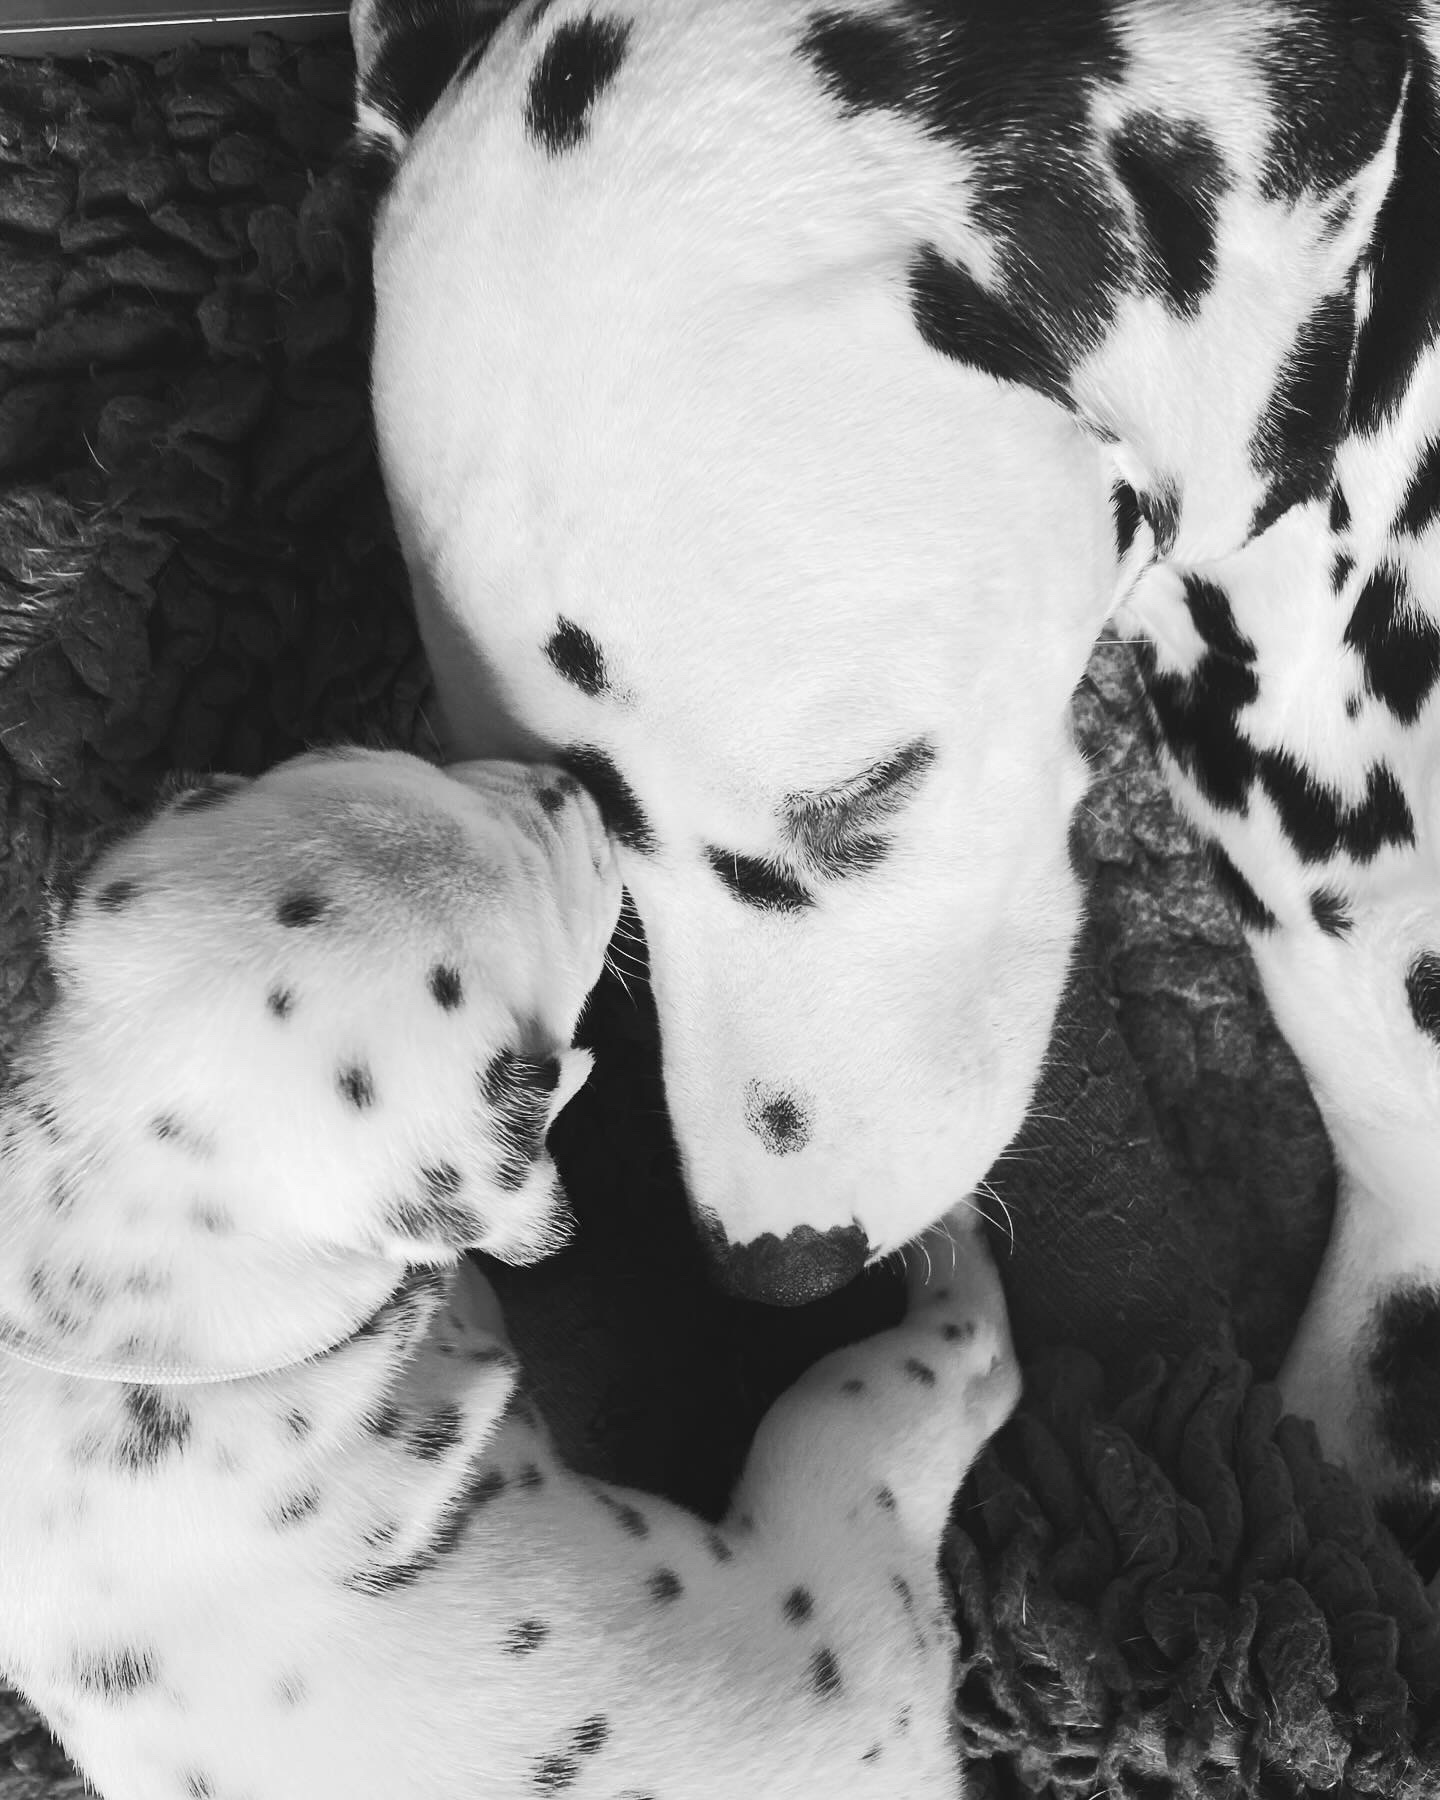 Mum and puppy love